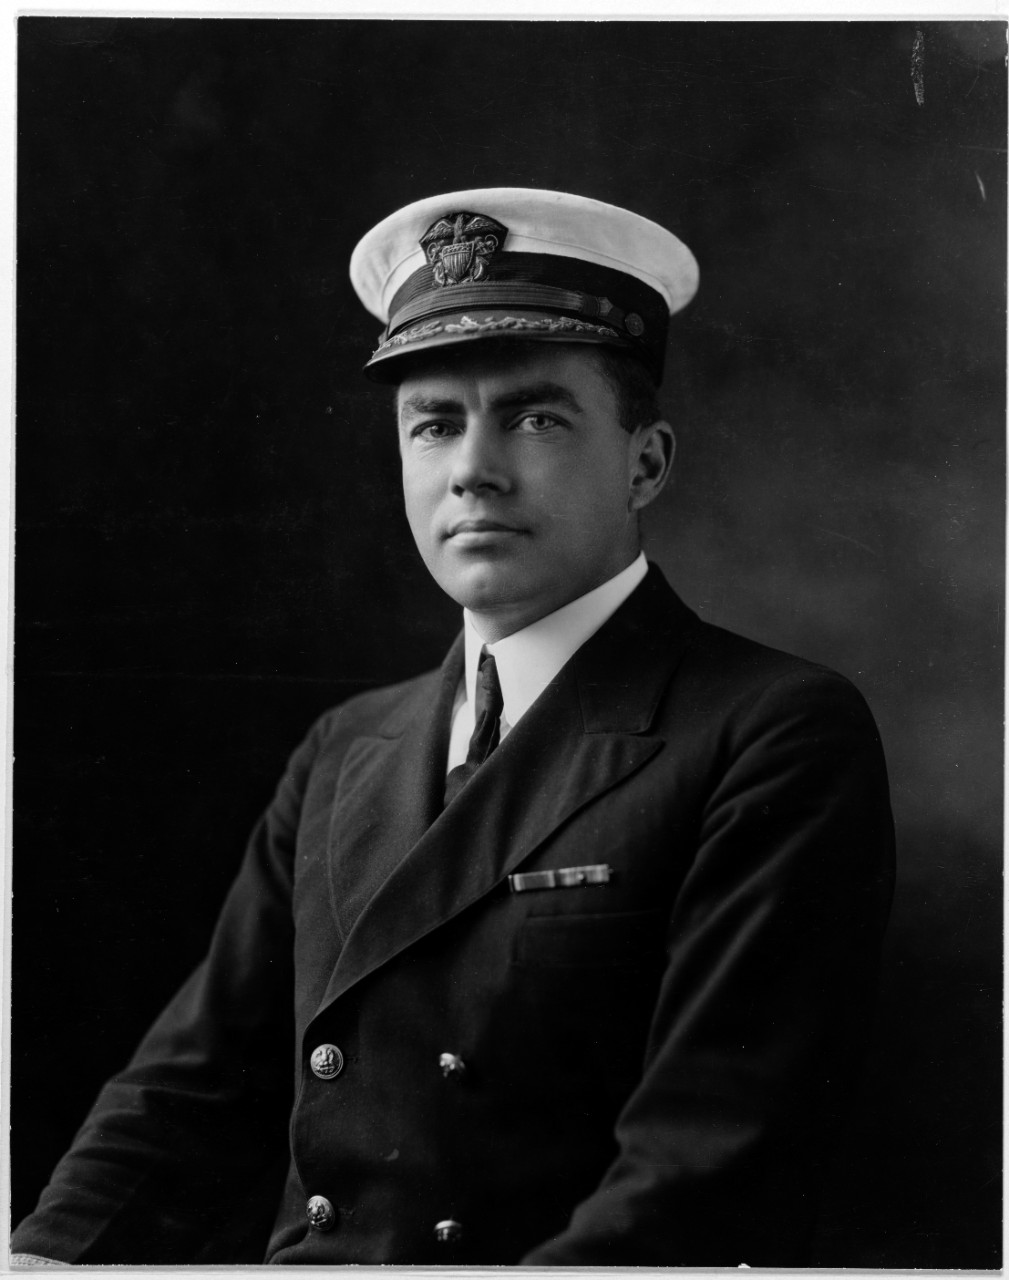 Commander Clyde S. McDowell, USN